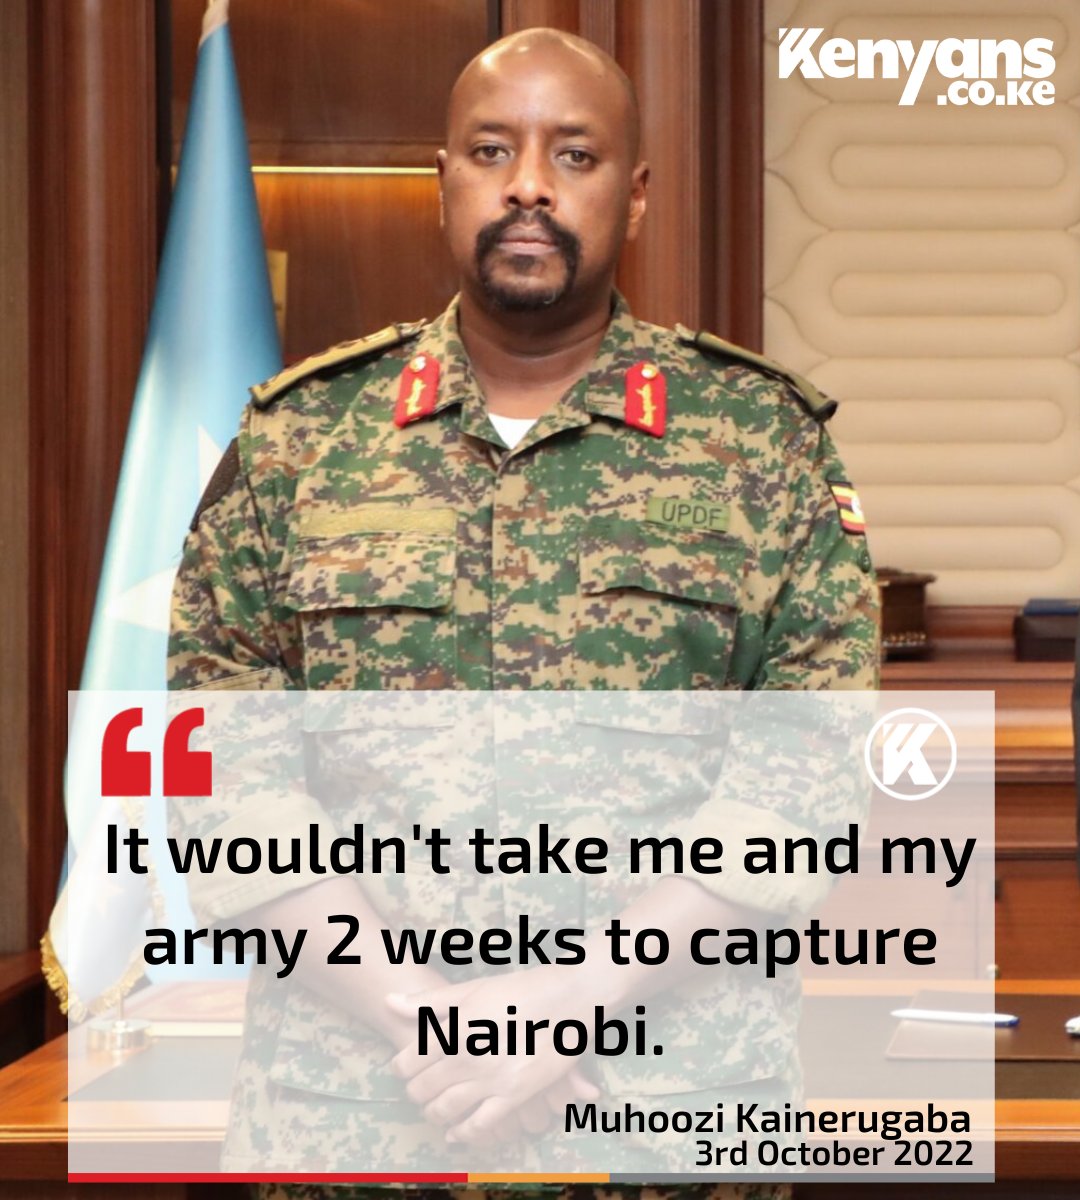 Museveni's son, Muhoozi Kainerugaba says it wouldn't take two weeks for Uganda to capture Nairobi.